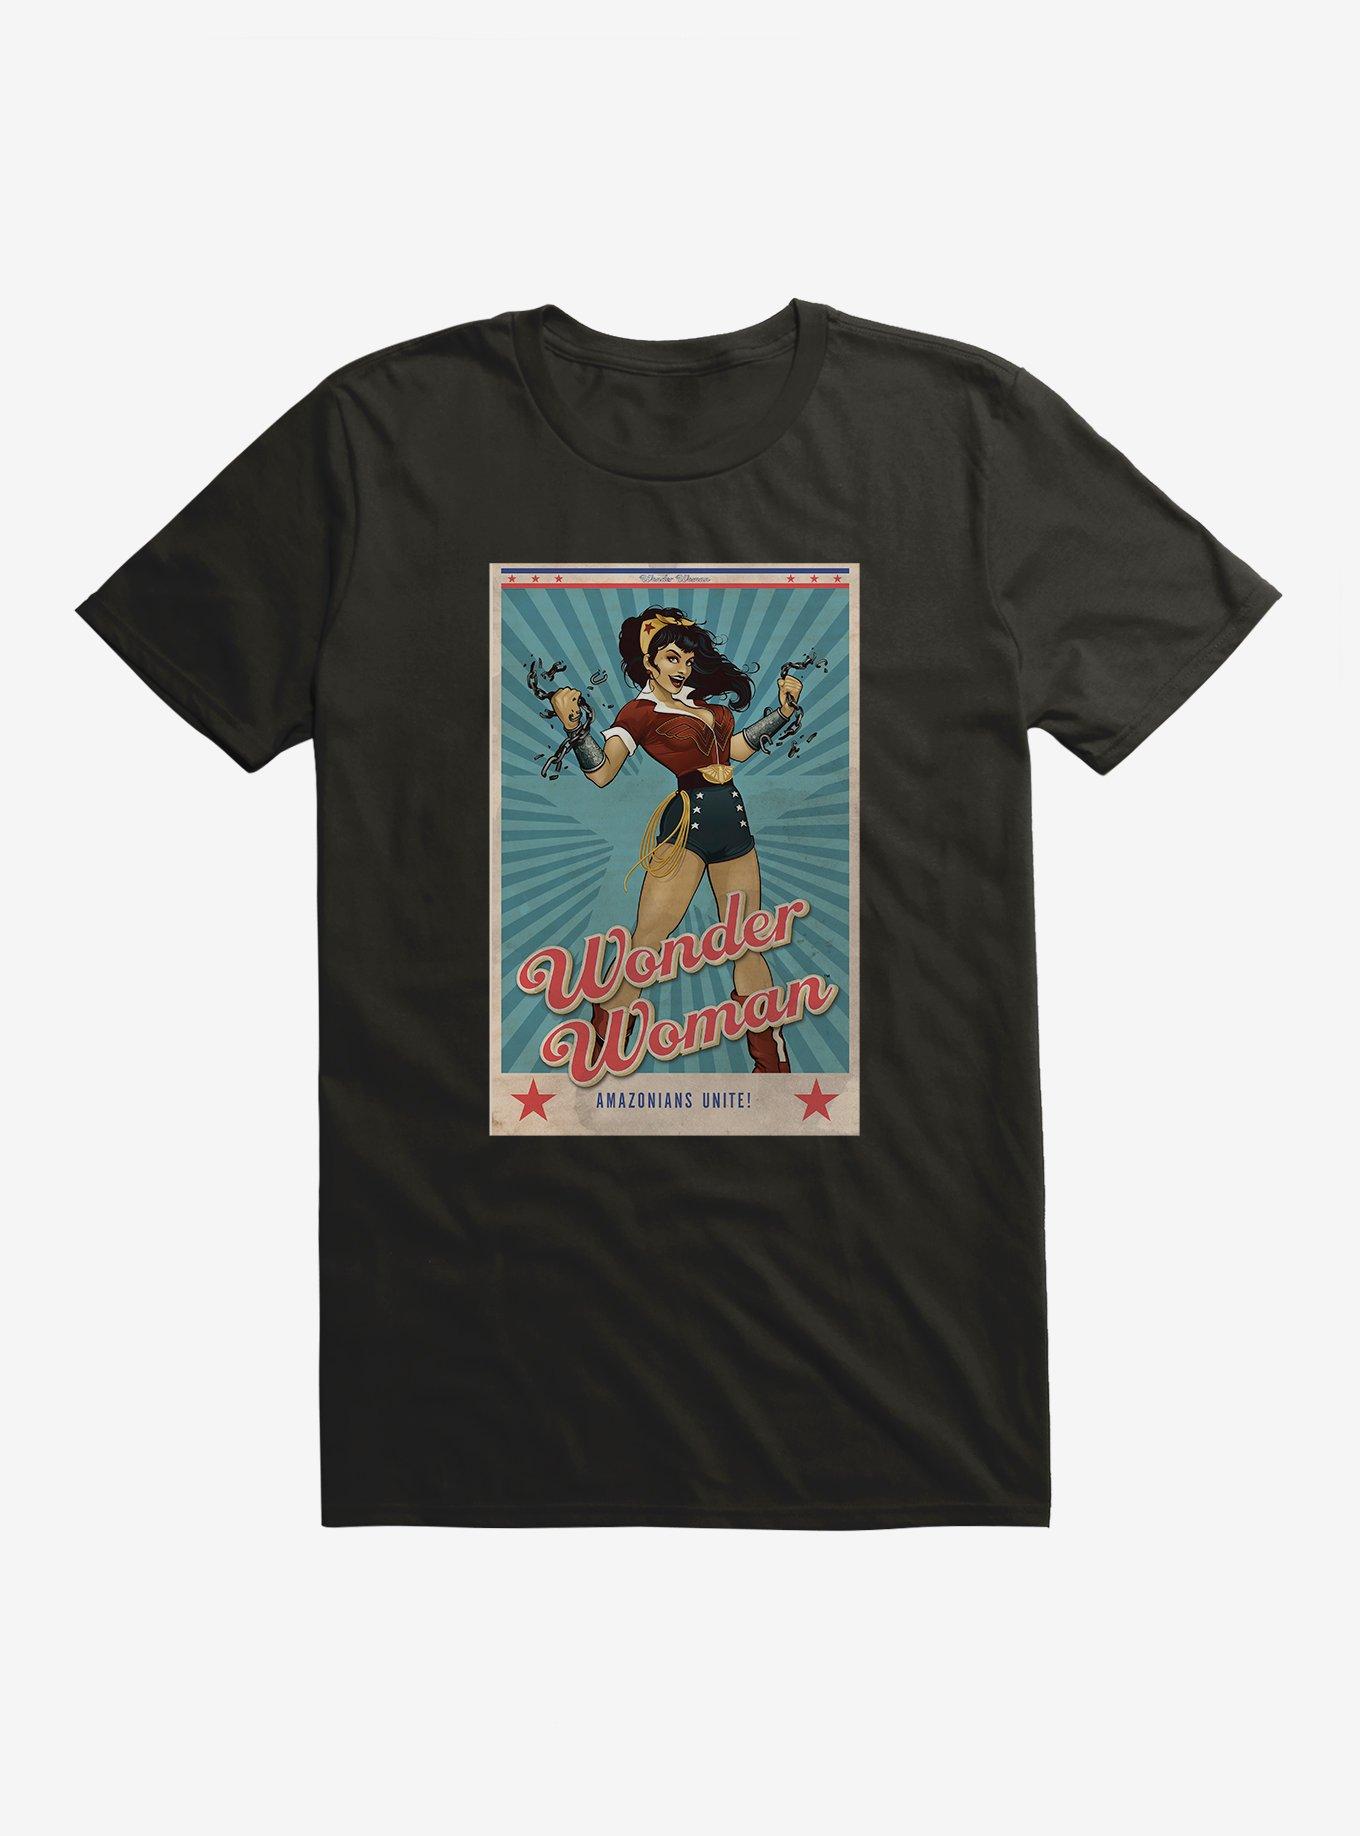 Hot Topic DC Comics Bombshells Wonder Woman ians Unite T-Shirt